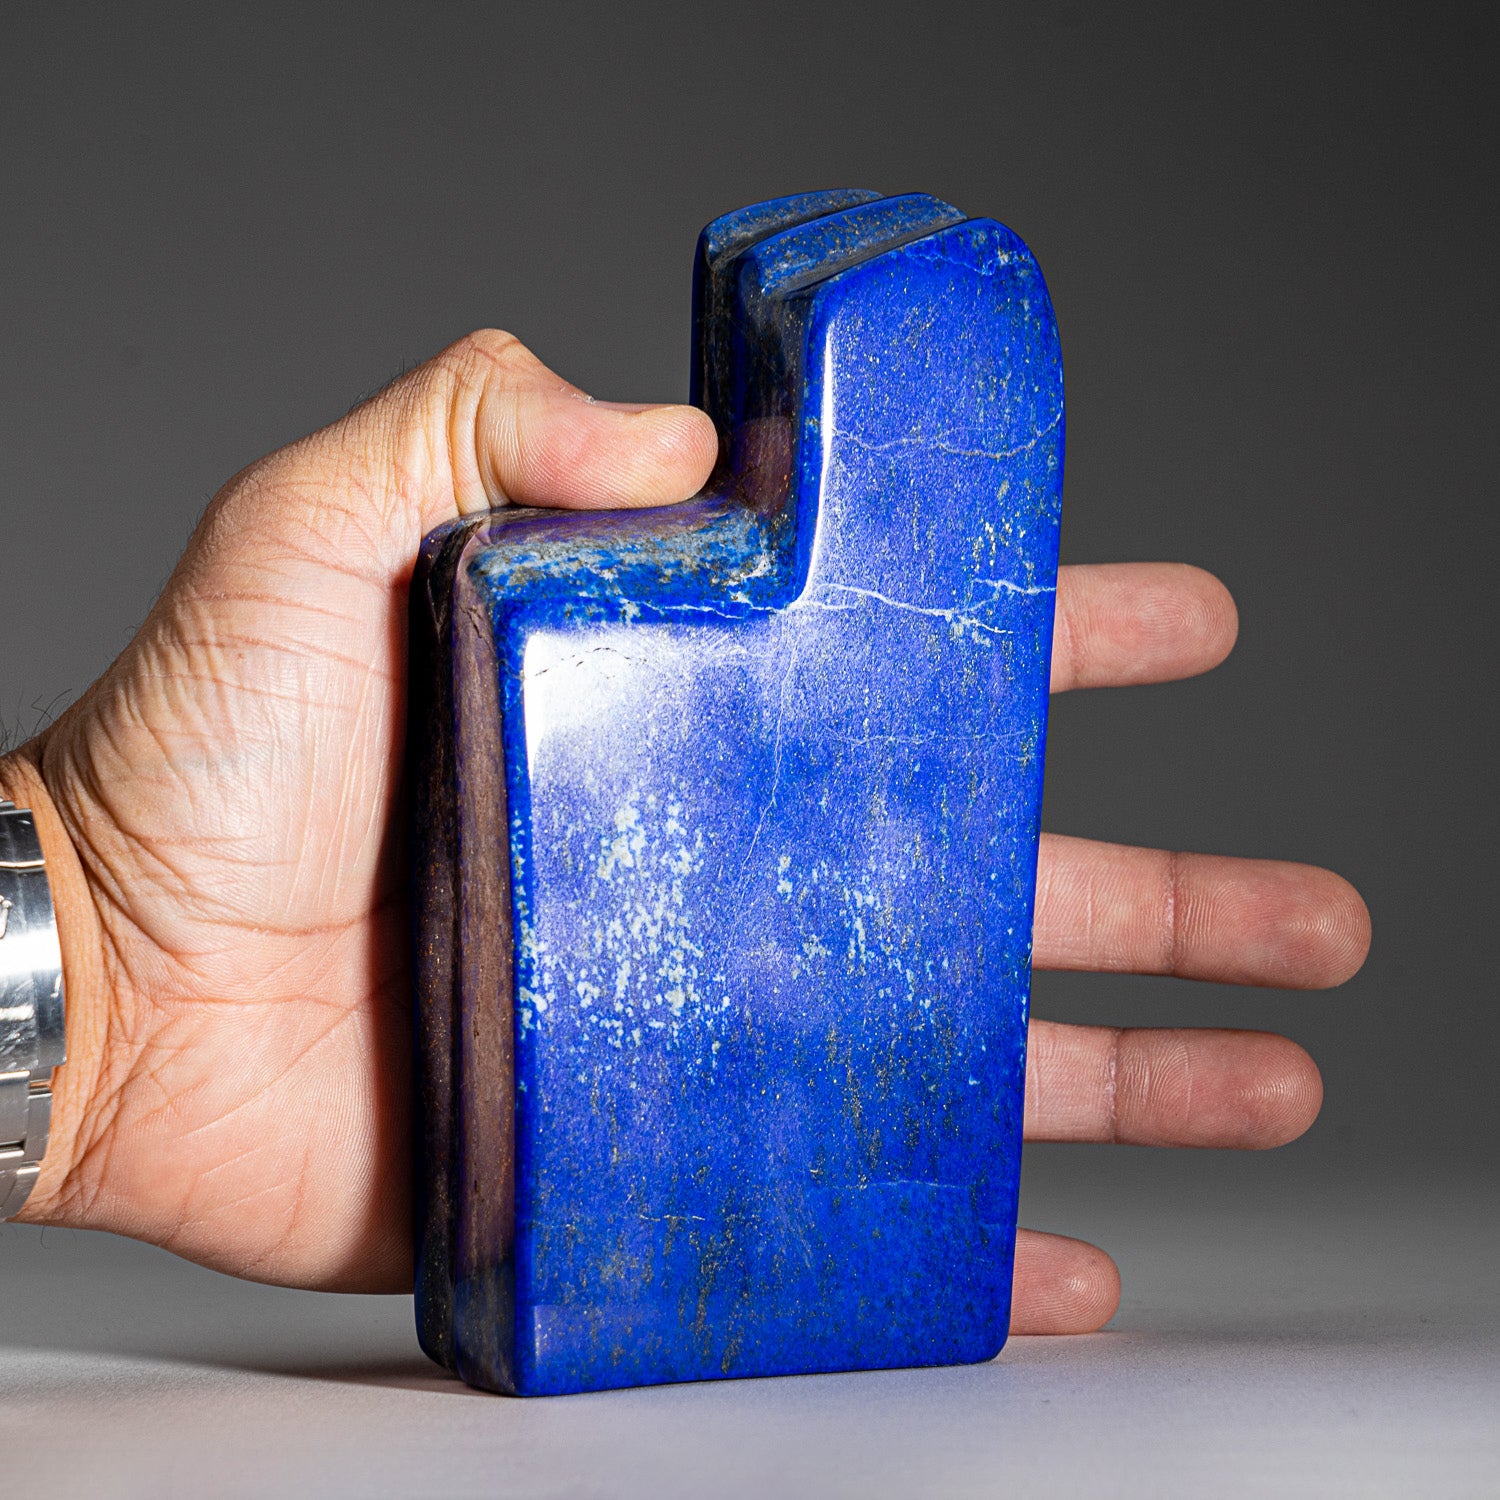 Polished Lapis Lazuli Freeform from Afghanistan (2 lbs)